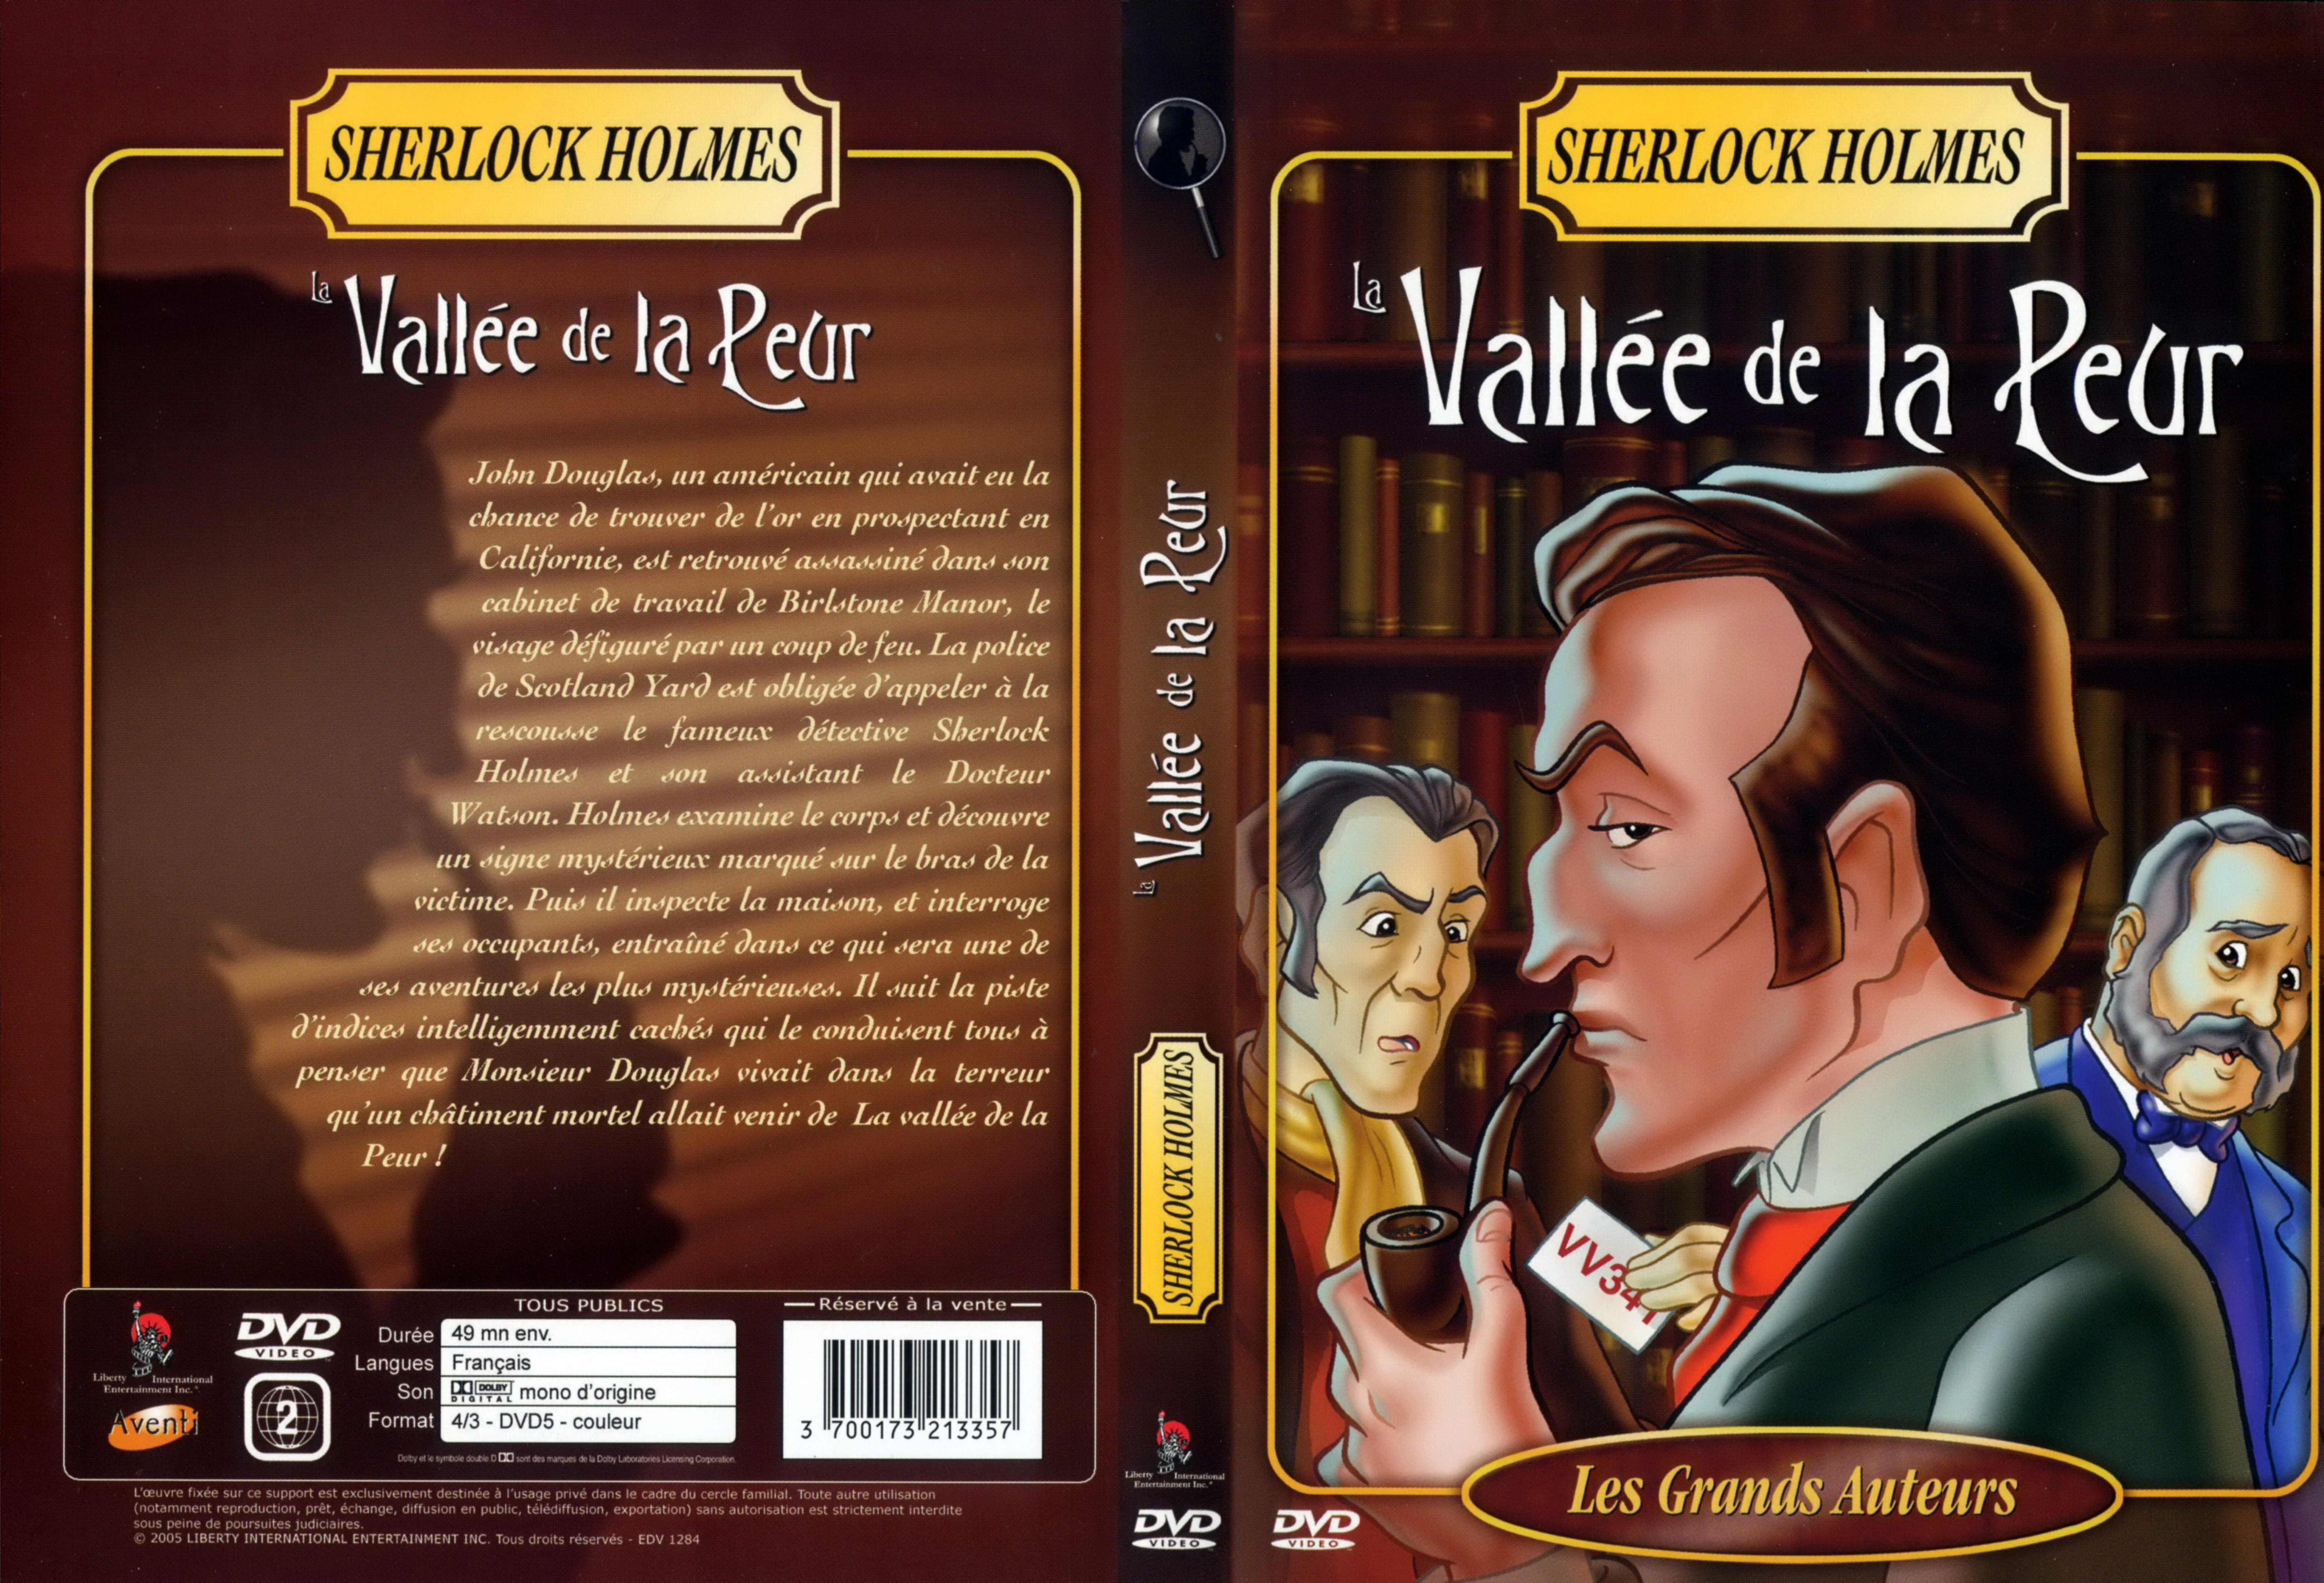 Jaquette DVD Sherlock Holmes (DA) La valle de la peur